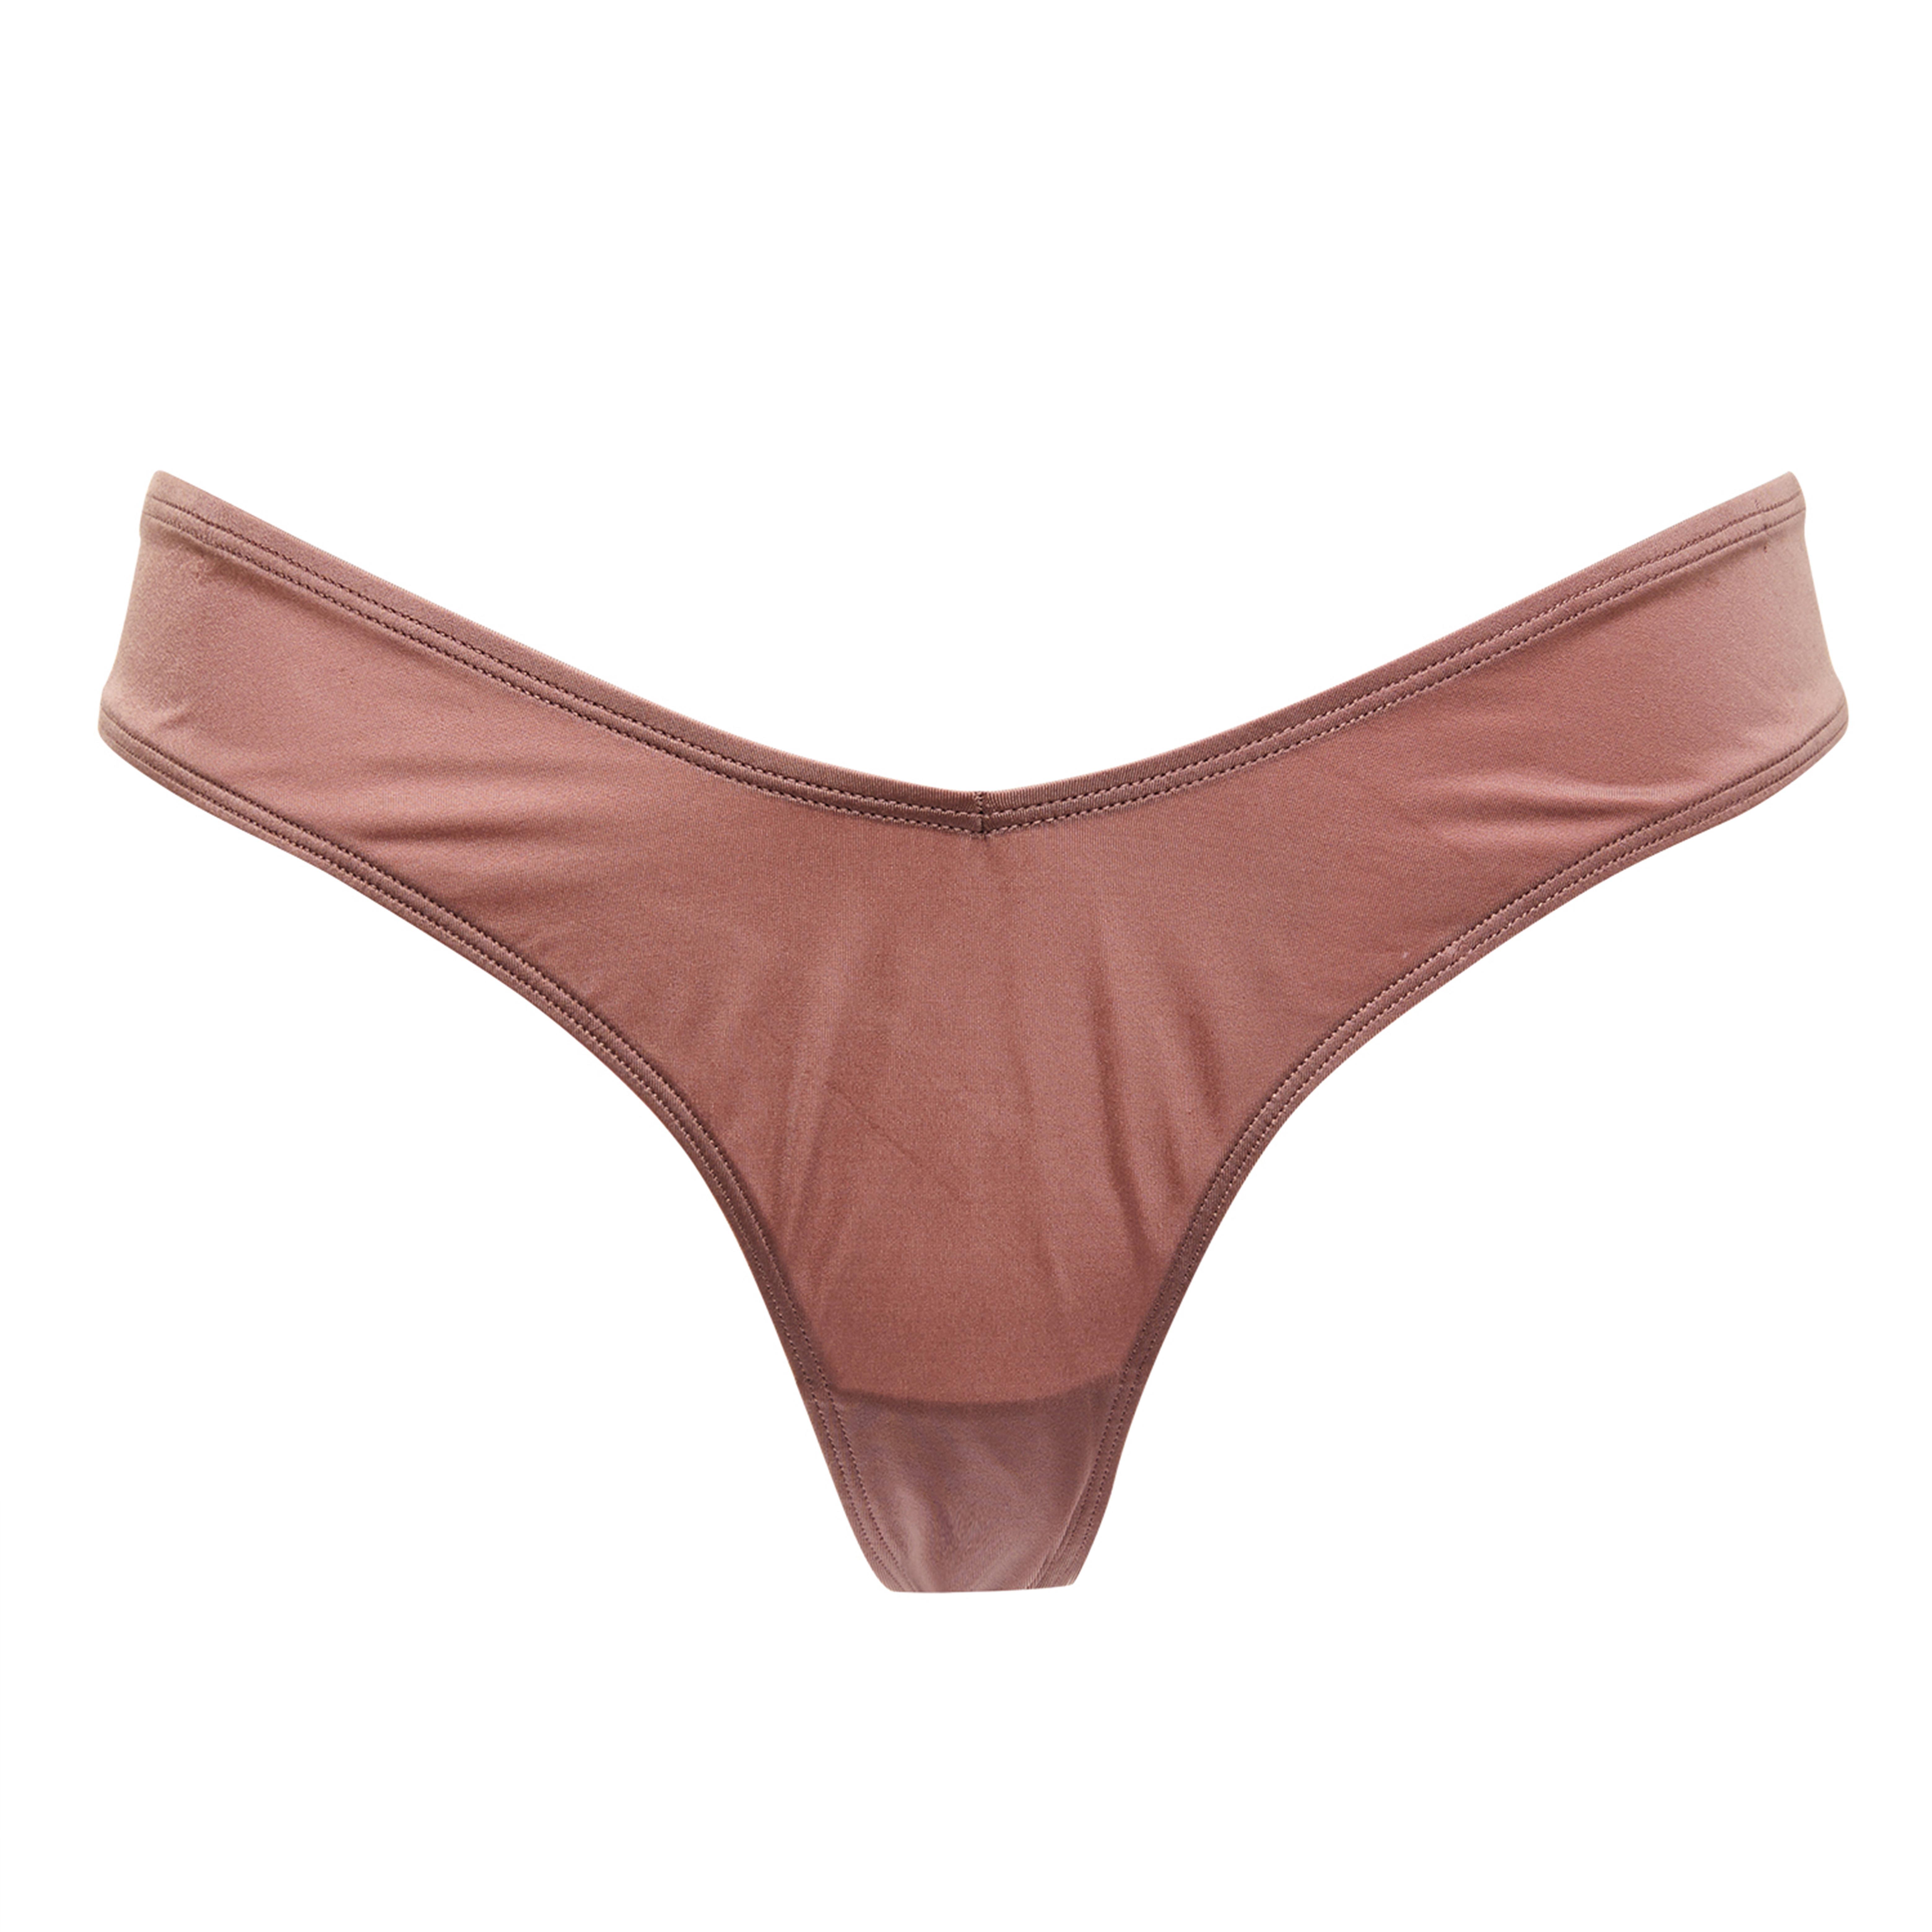 Primark Ladies 5 Pack Microfibre Lace Waist Thong Underwear Brief Knickers